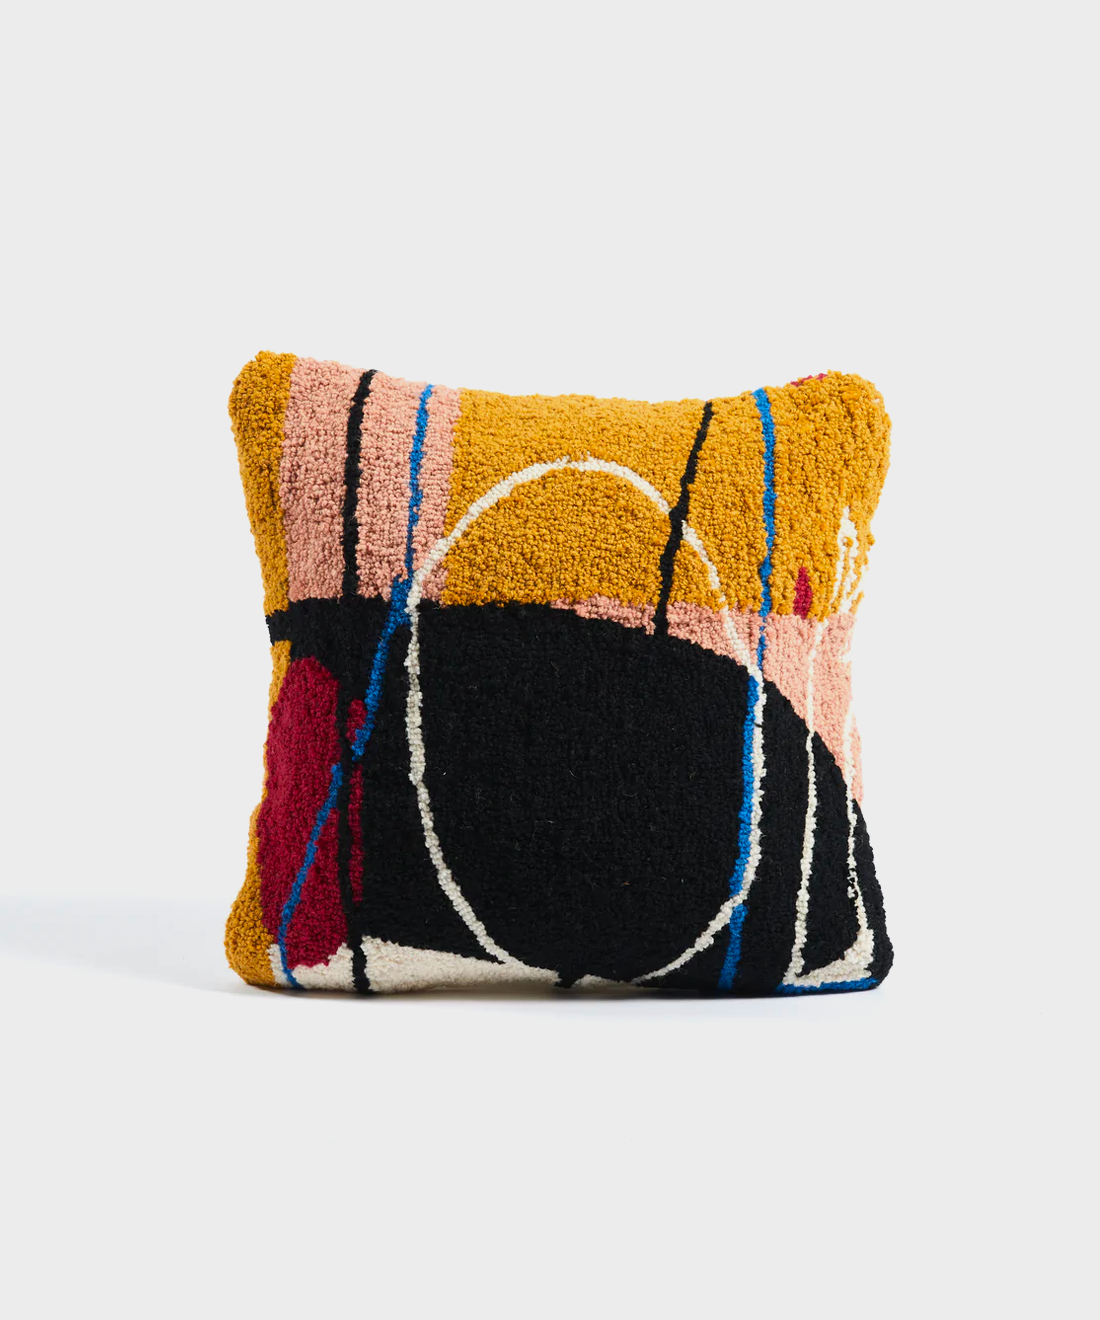 Renee Rossouw Colourful Cushion, 2